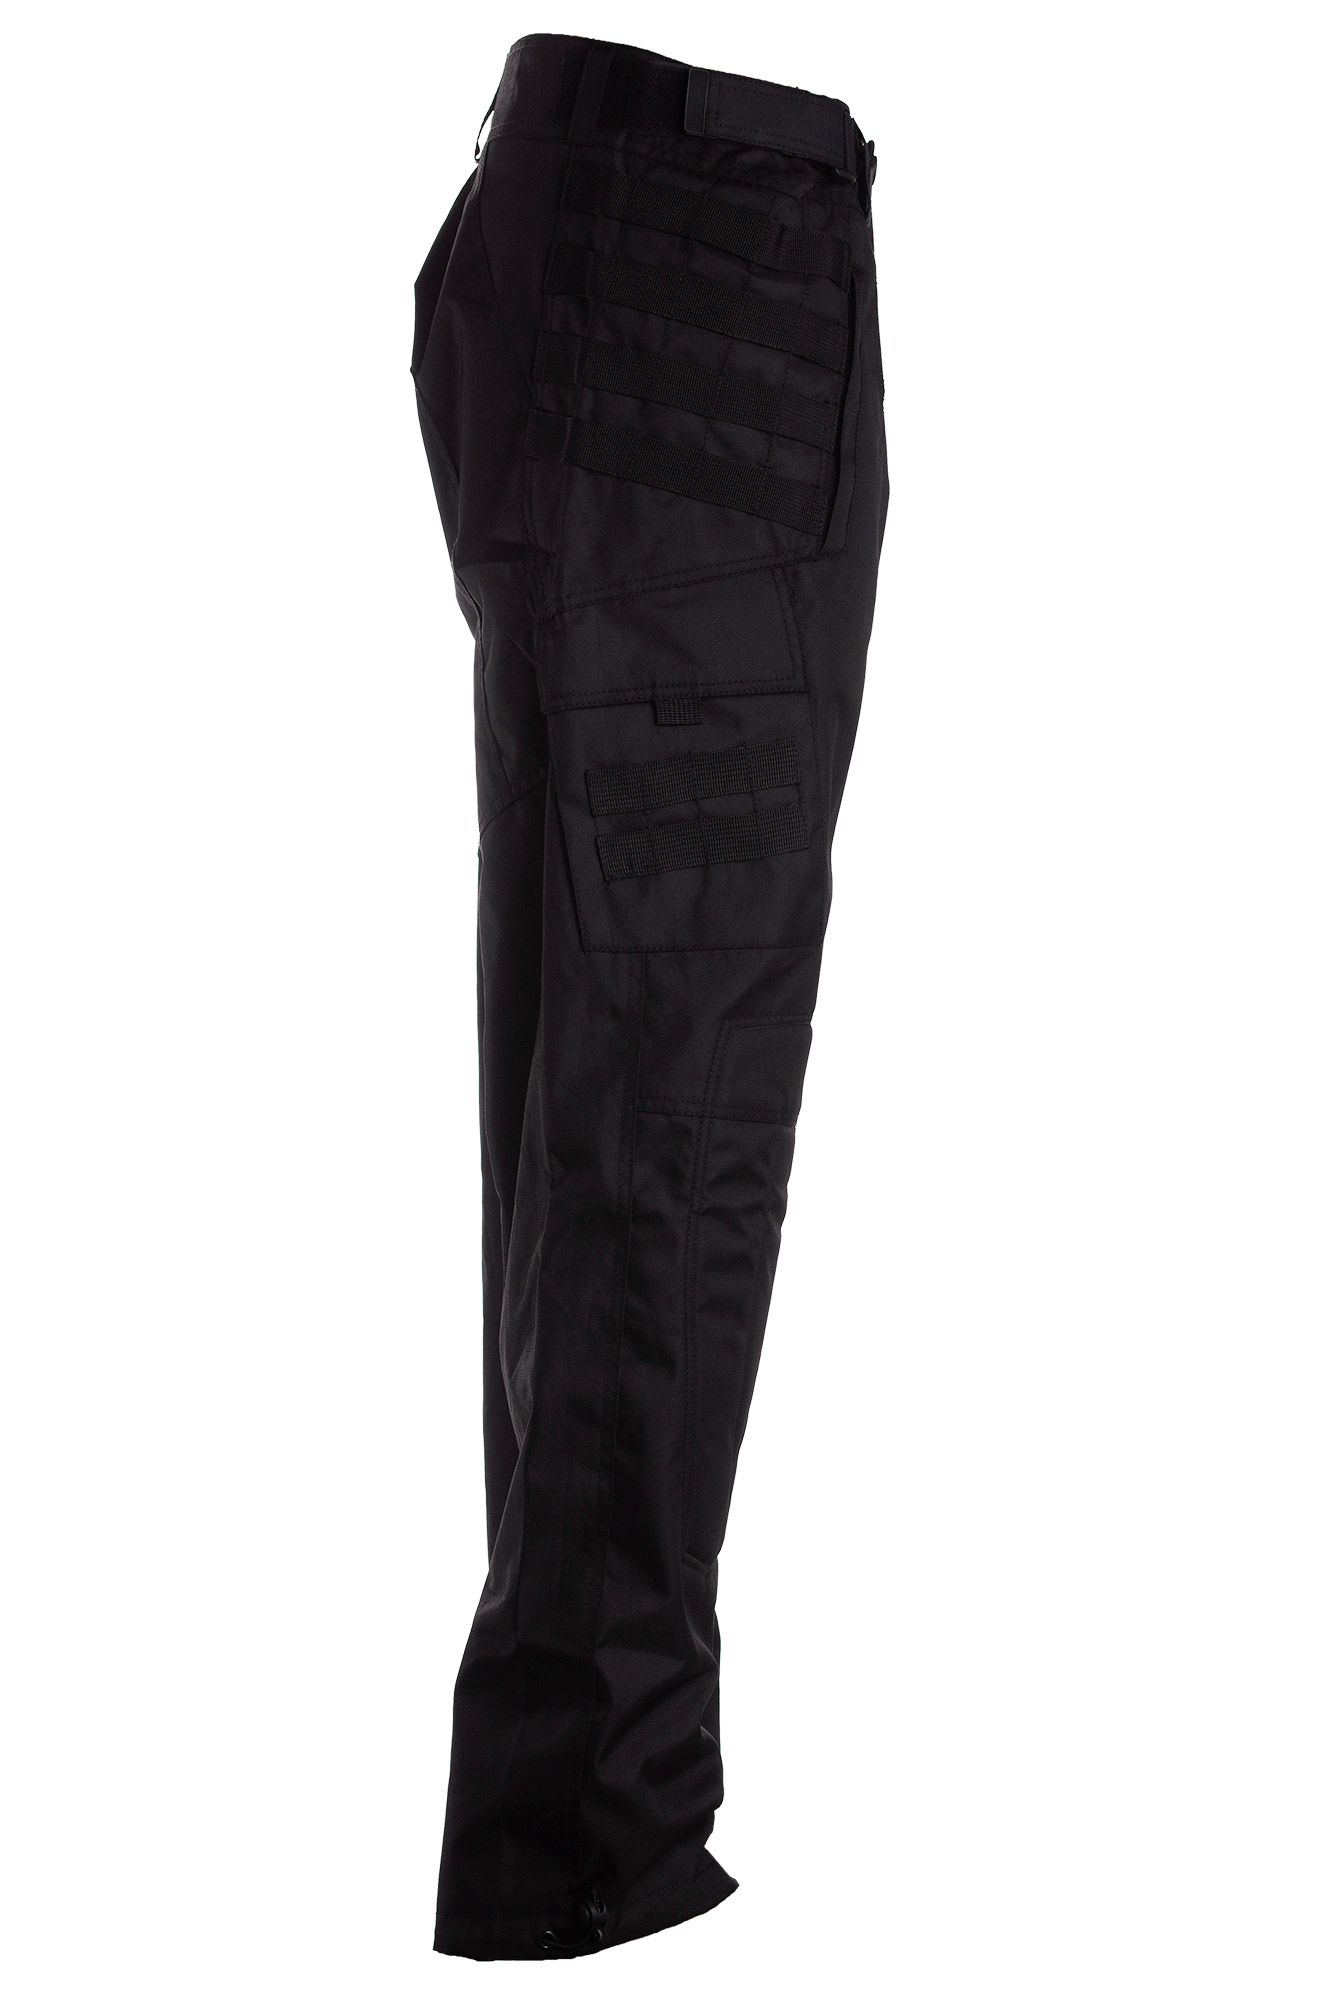 Gunfighter Sports  TAC Pants - Black